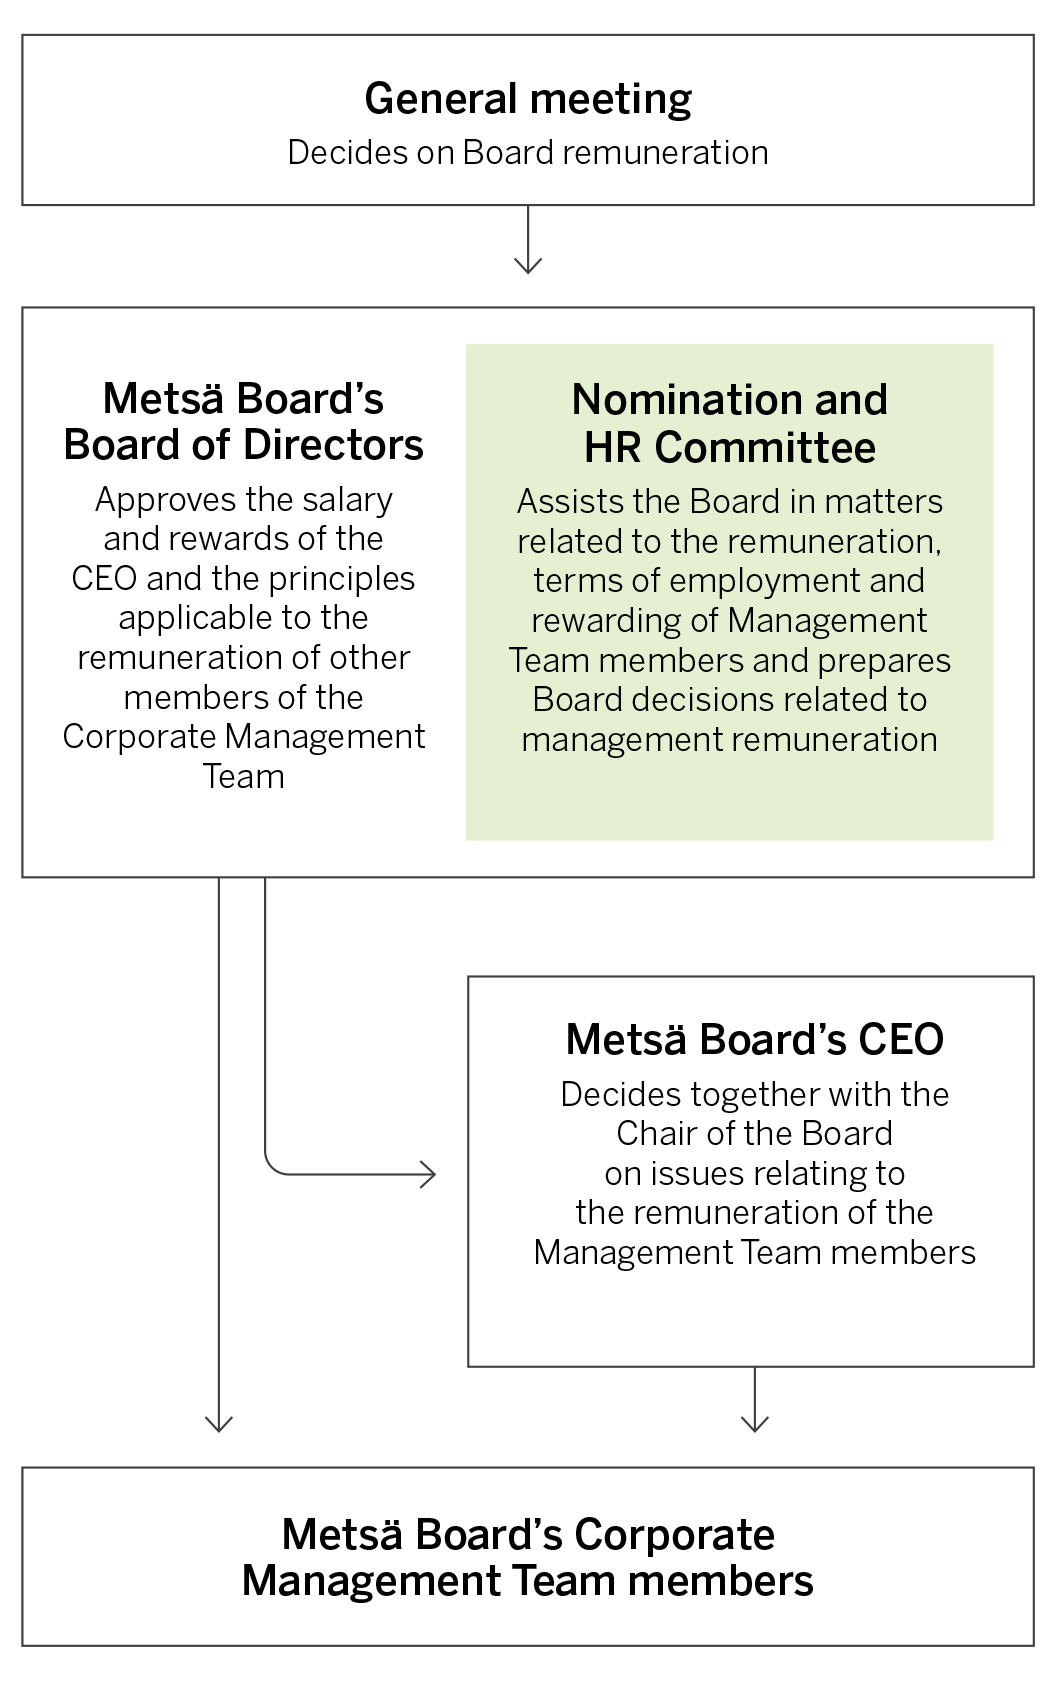 Metsa-Board-compensation-decision-making-process.jpg